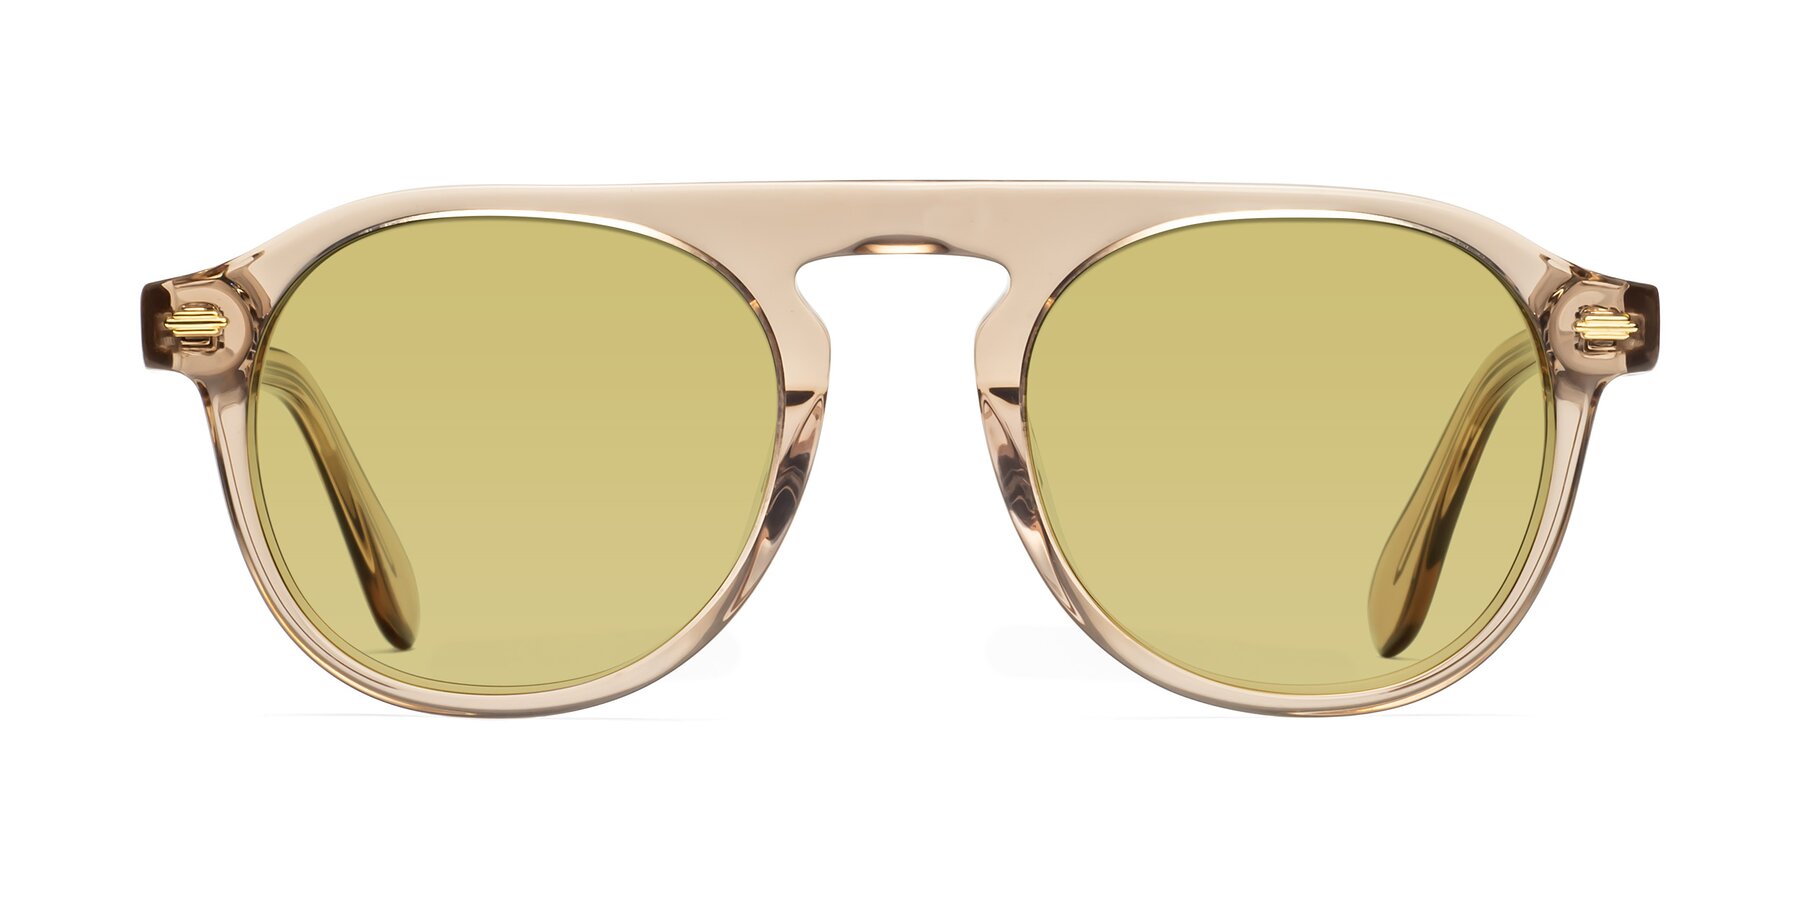 Mufasa - light Brown Sunglasses